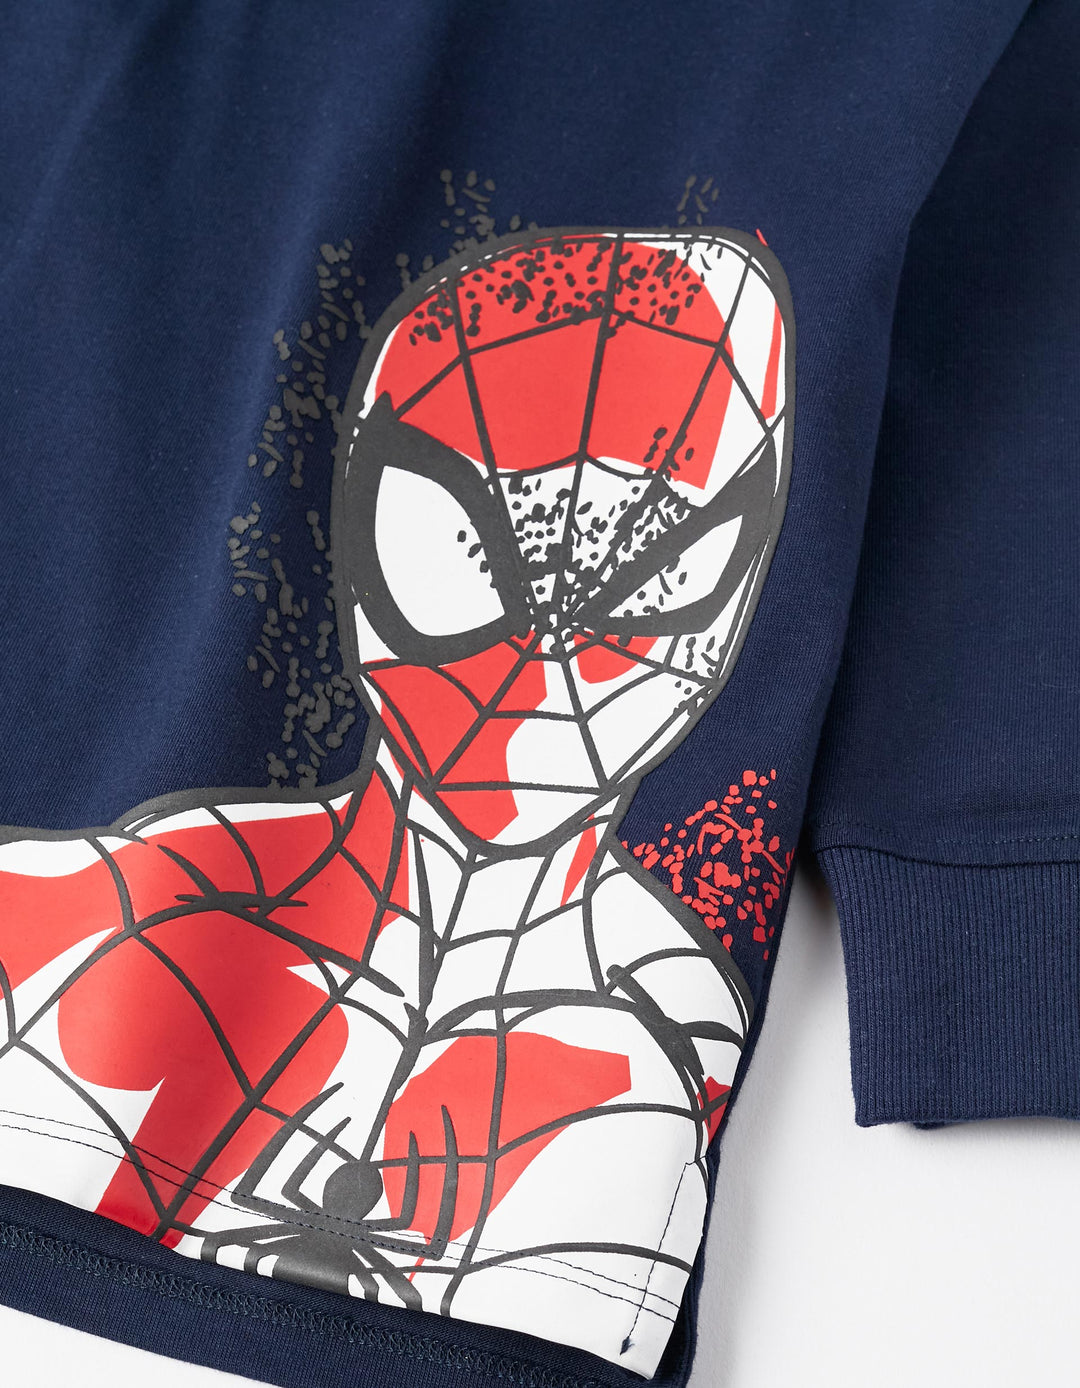 Cotton Hooded T-shirt for Boys 'Spider-Man', Dark Blue